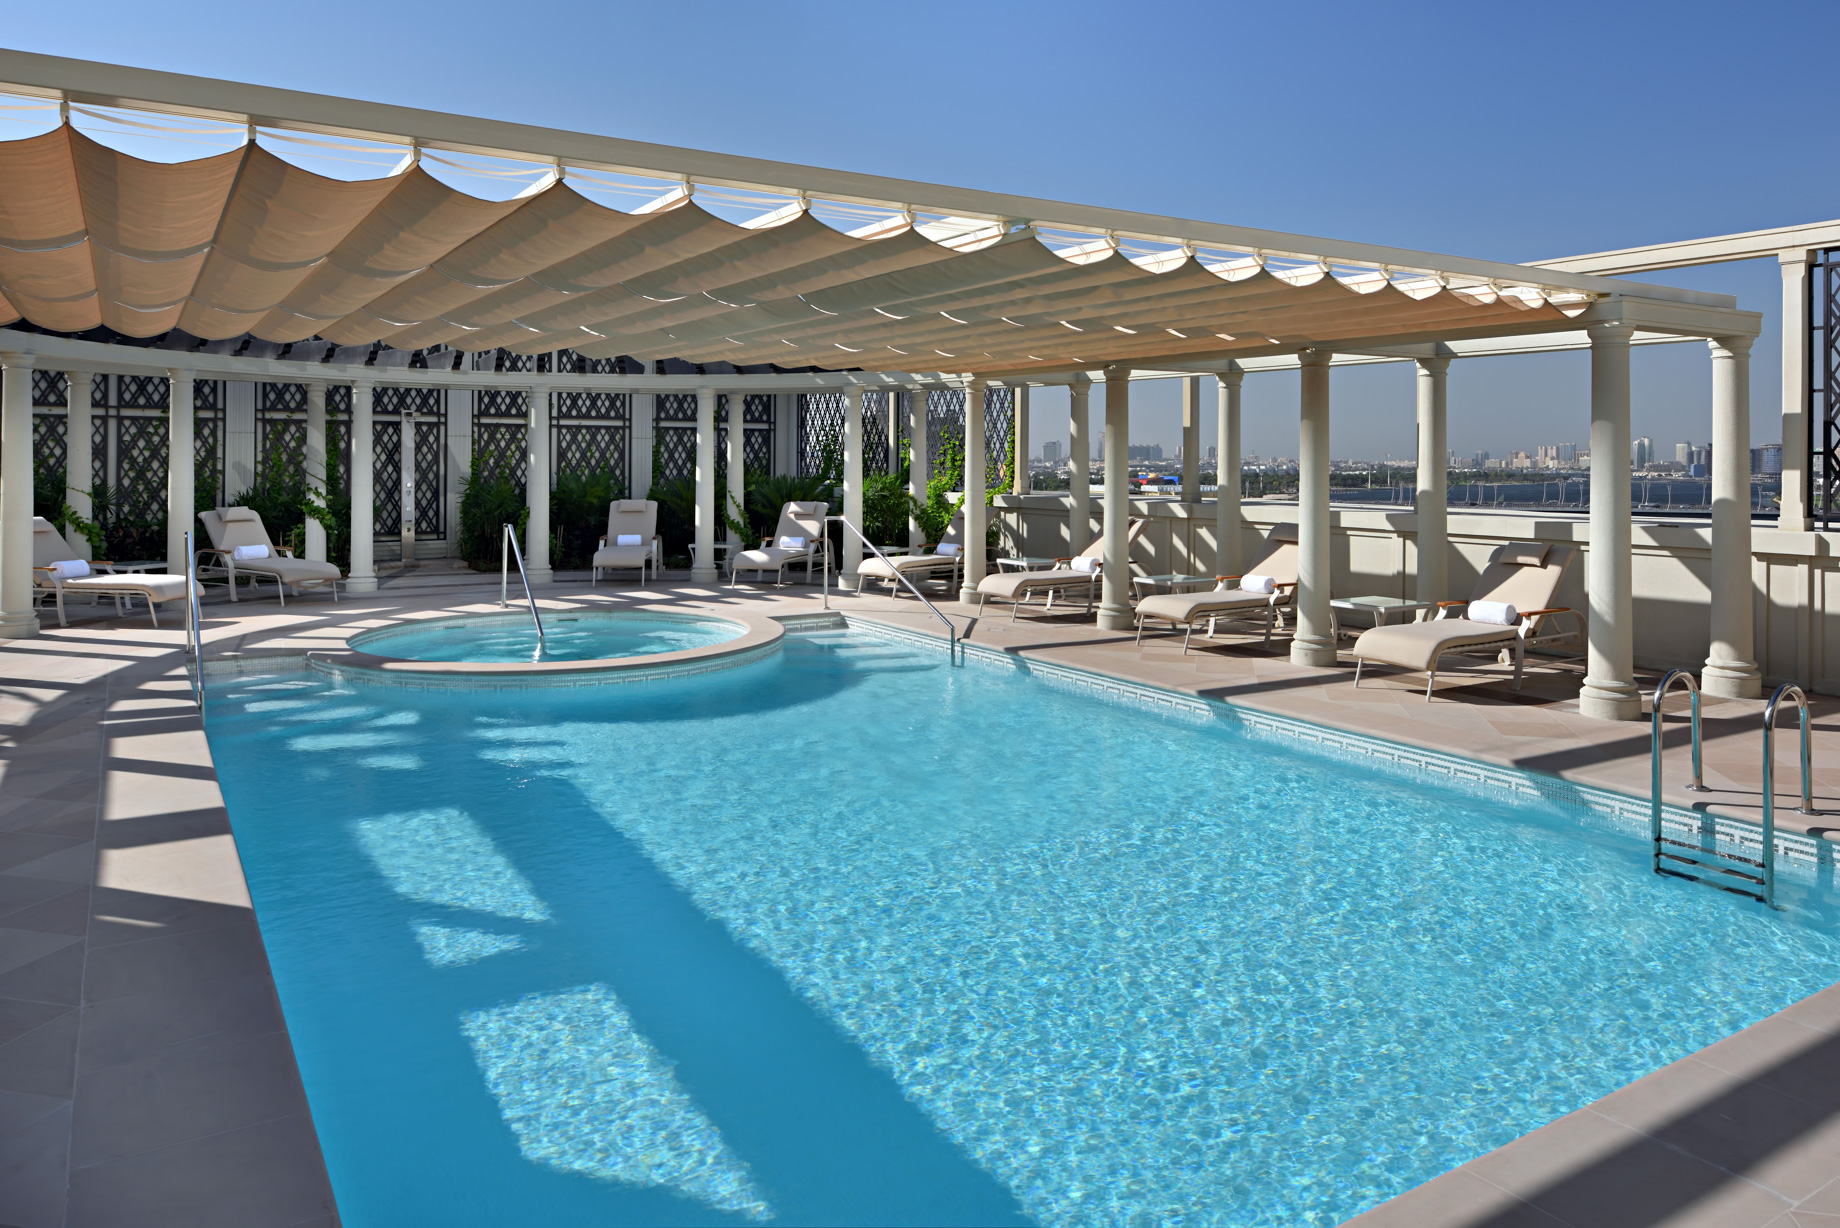 Palazzo Versace Dubai Hotel – Jaddaf Waterfront, Dubai, UAE – Imperial Suite Pool and Jacuzzi